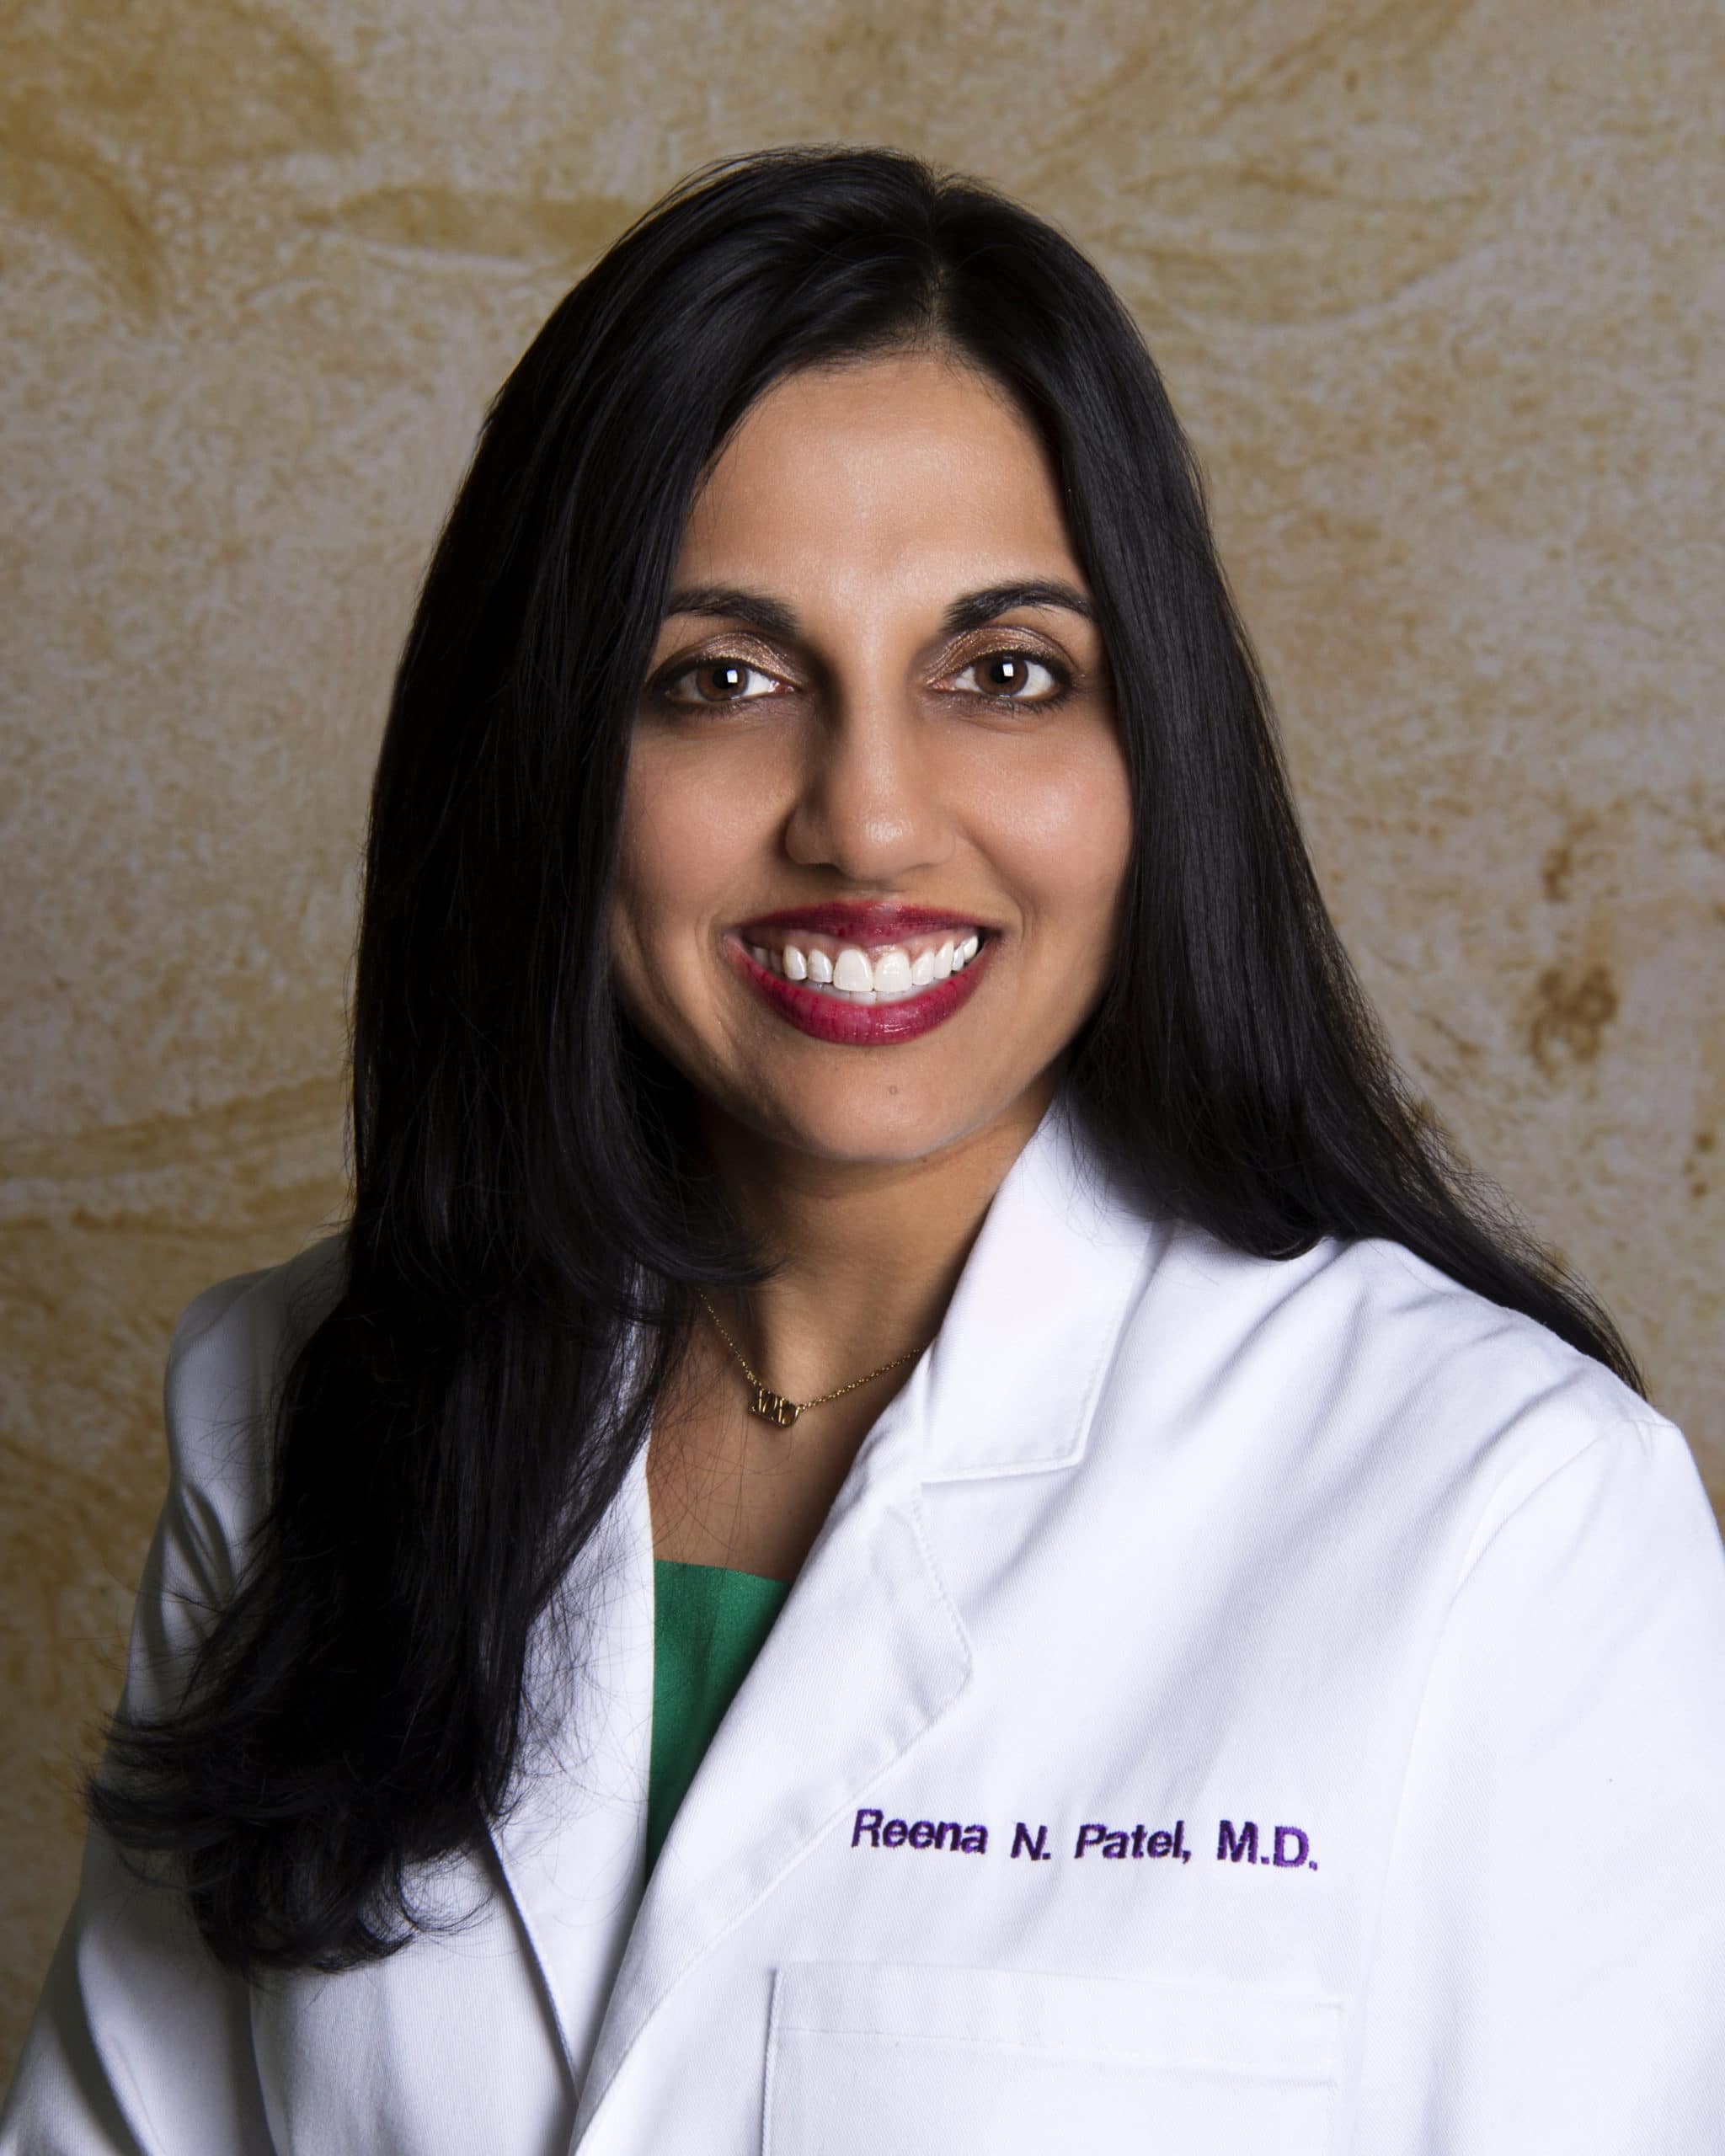 Dr. Reena N. Patel